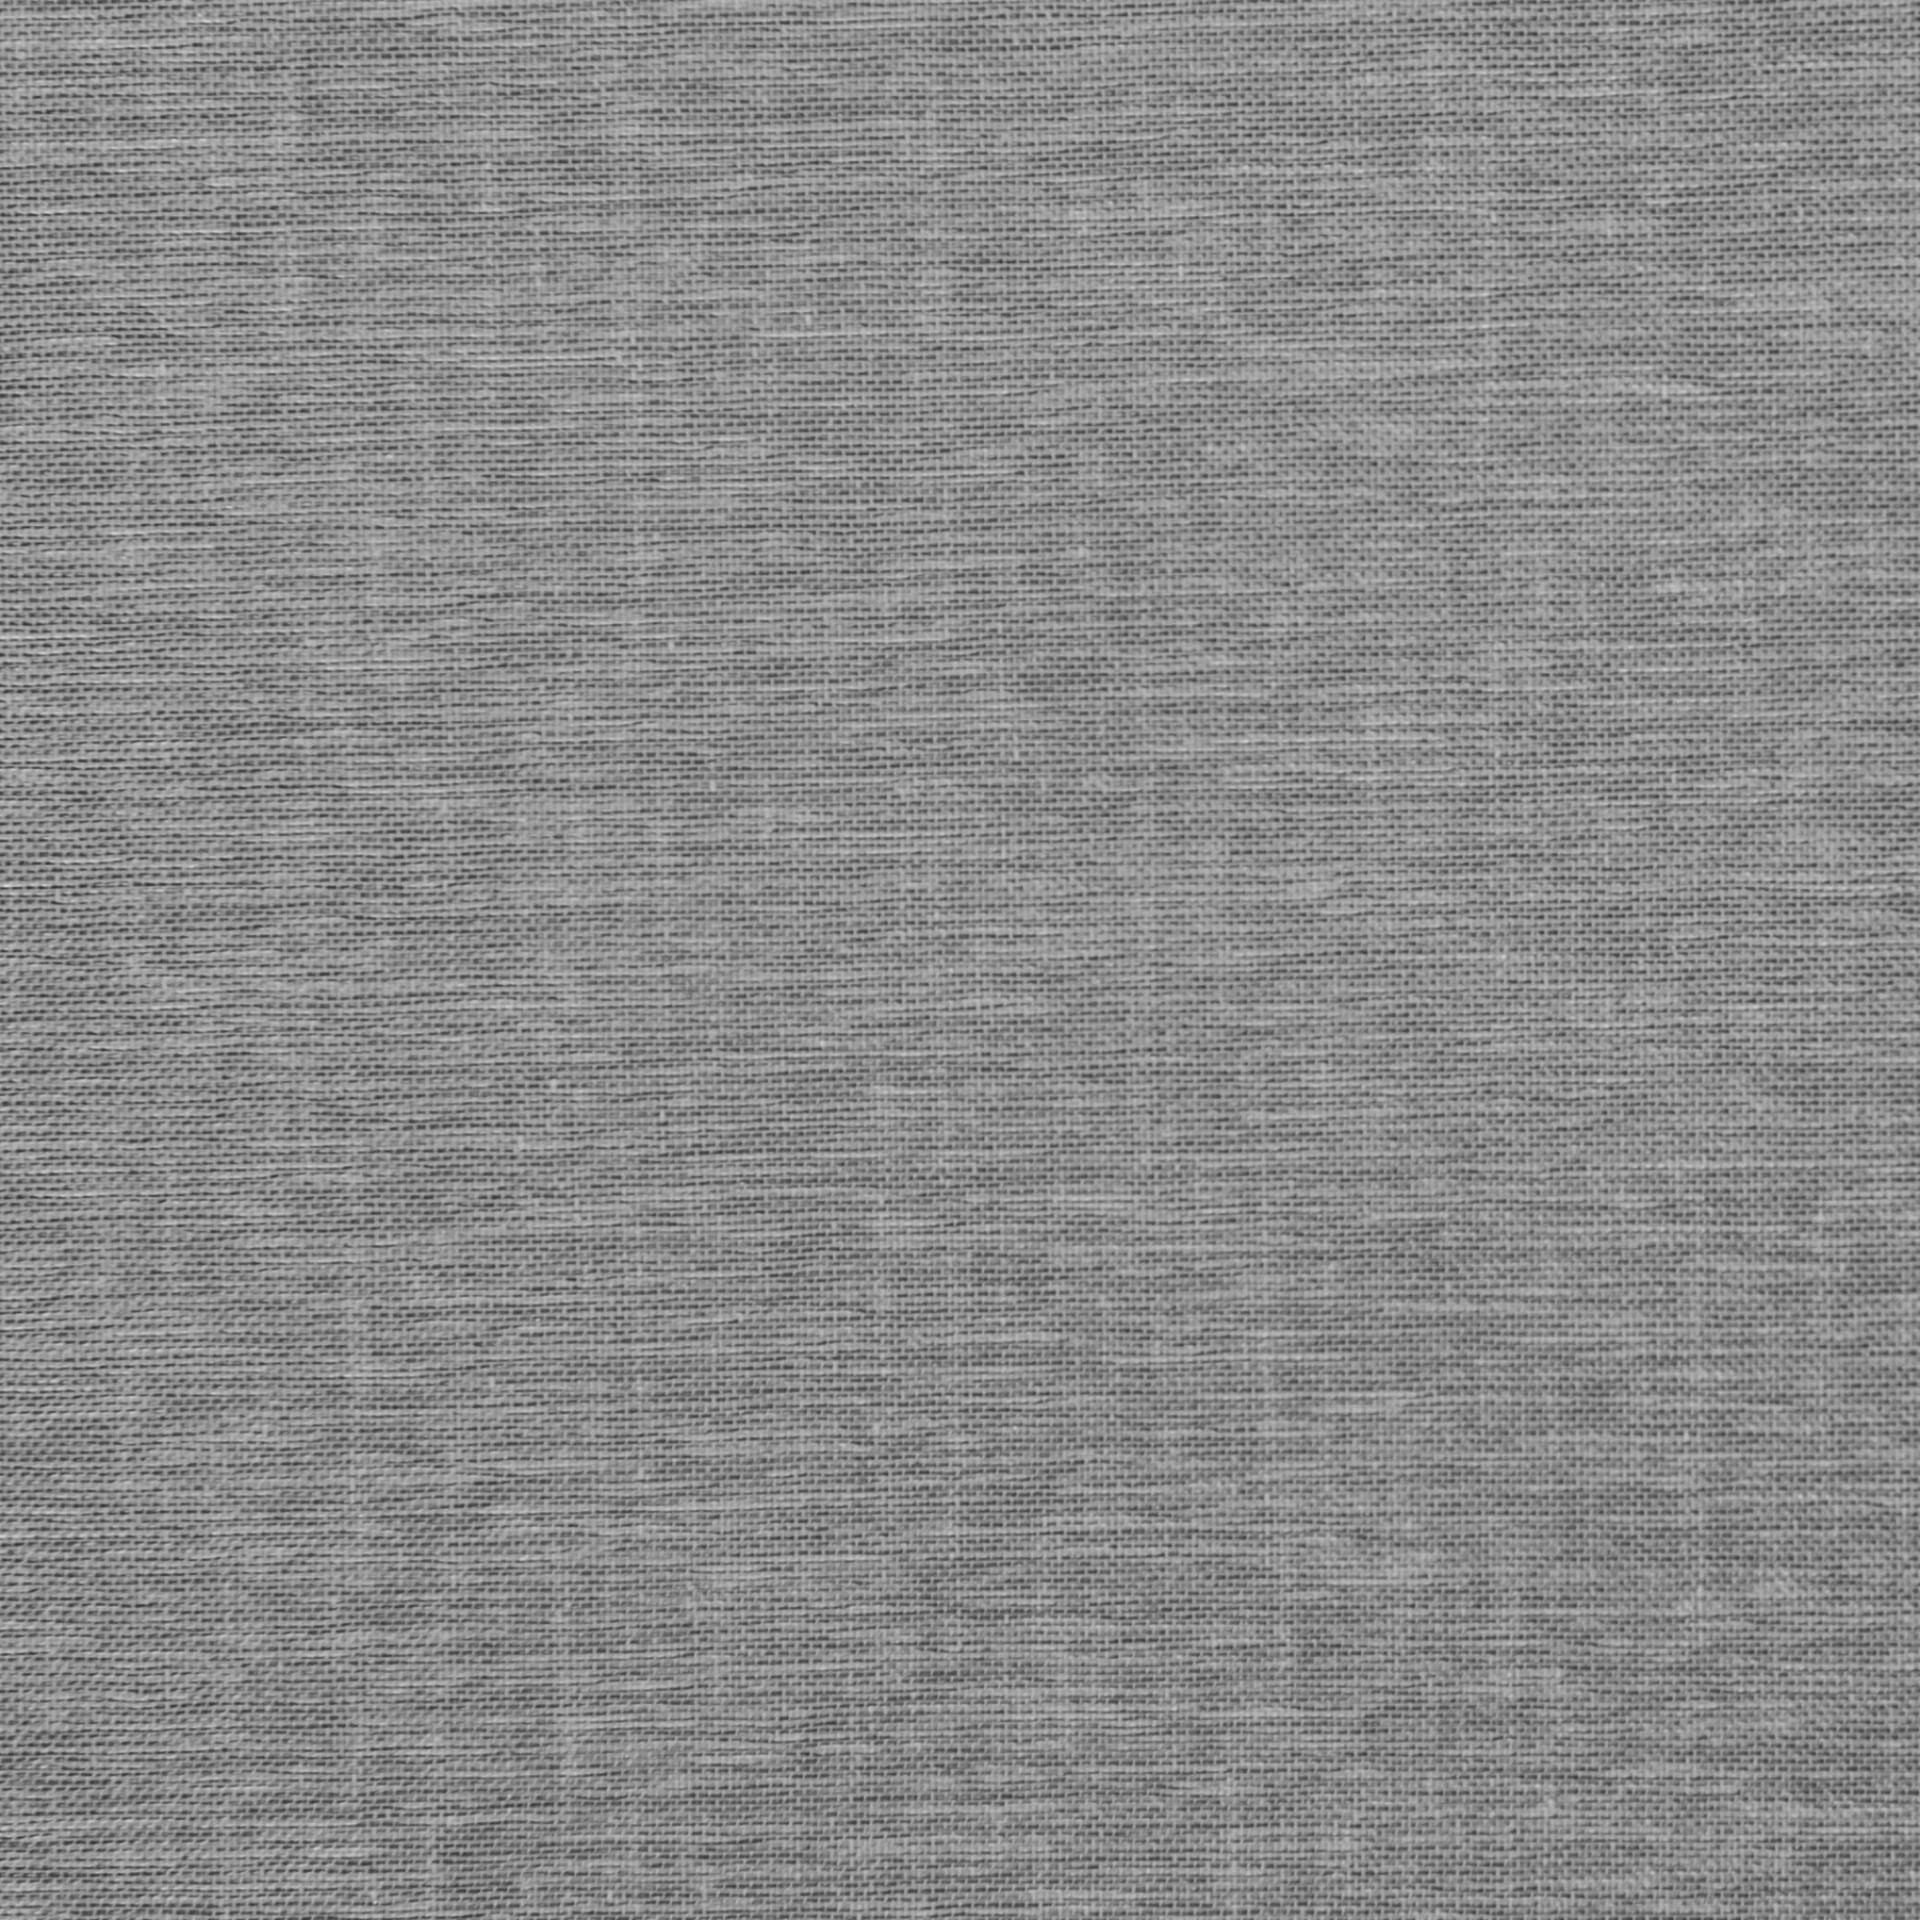 Alba Translucent Roller Blind Grey Fabric Detail